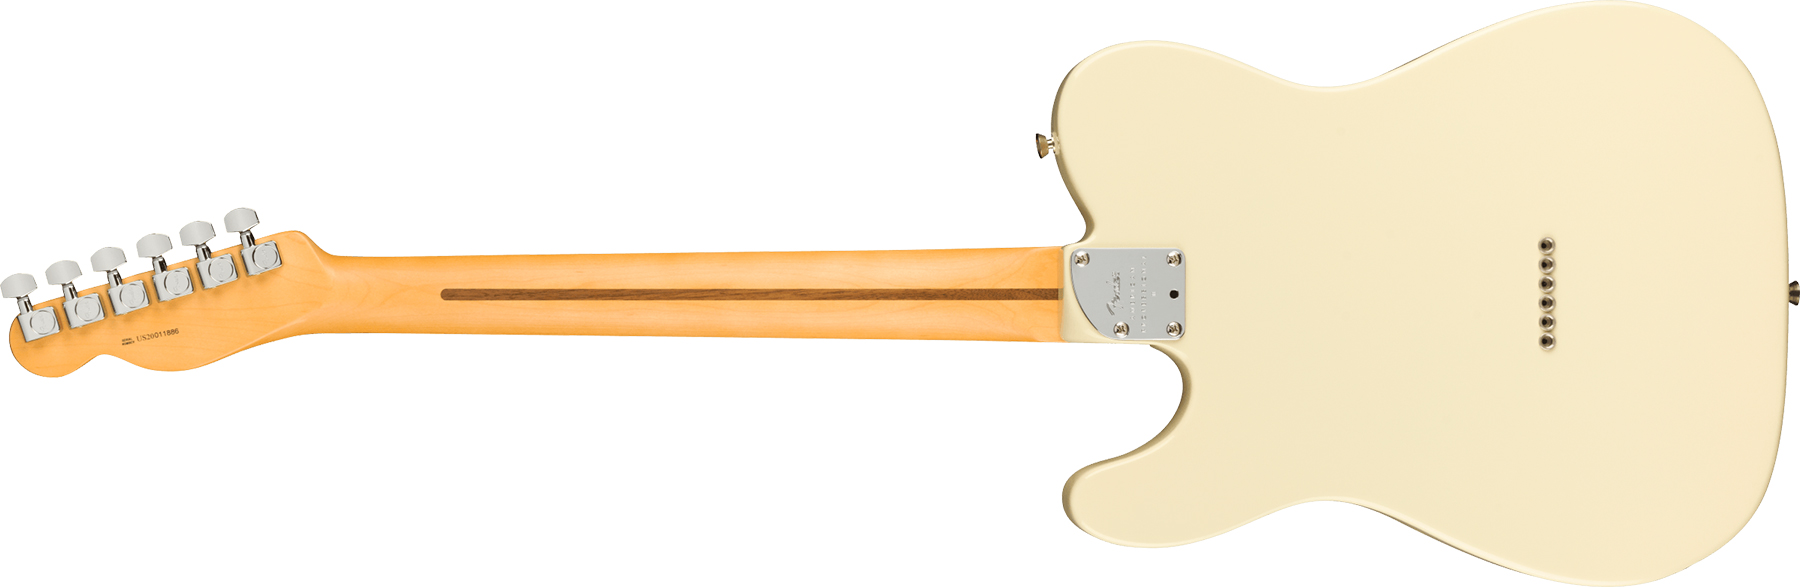 Fender Tele American Professional Ii Usa Rw - Olympic White - E-Gitarre in Teleform - Variation 1